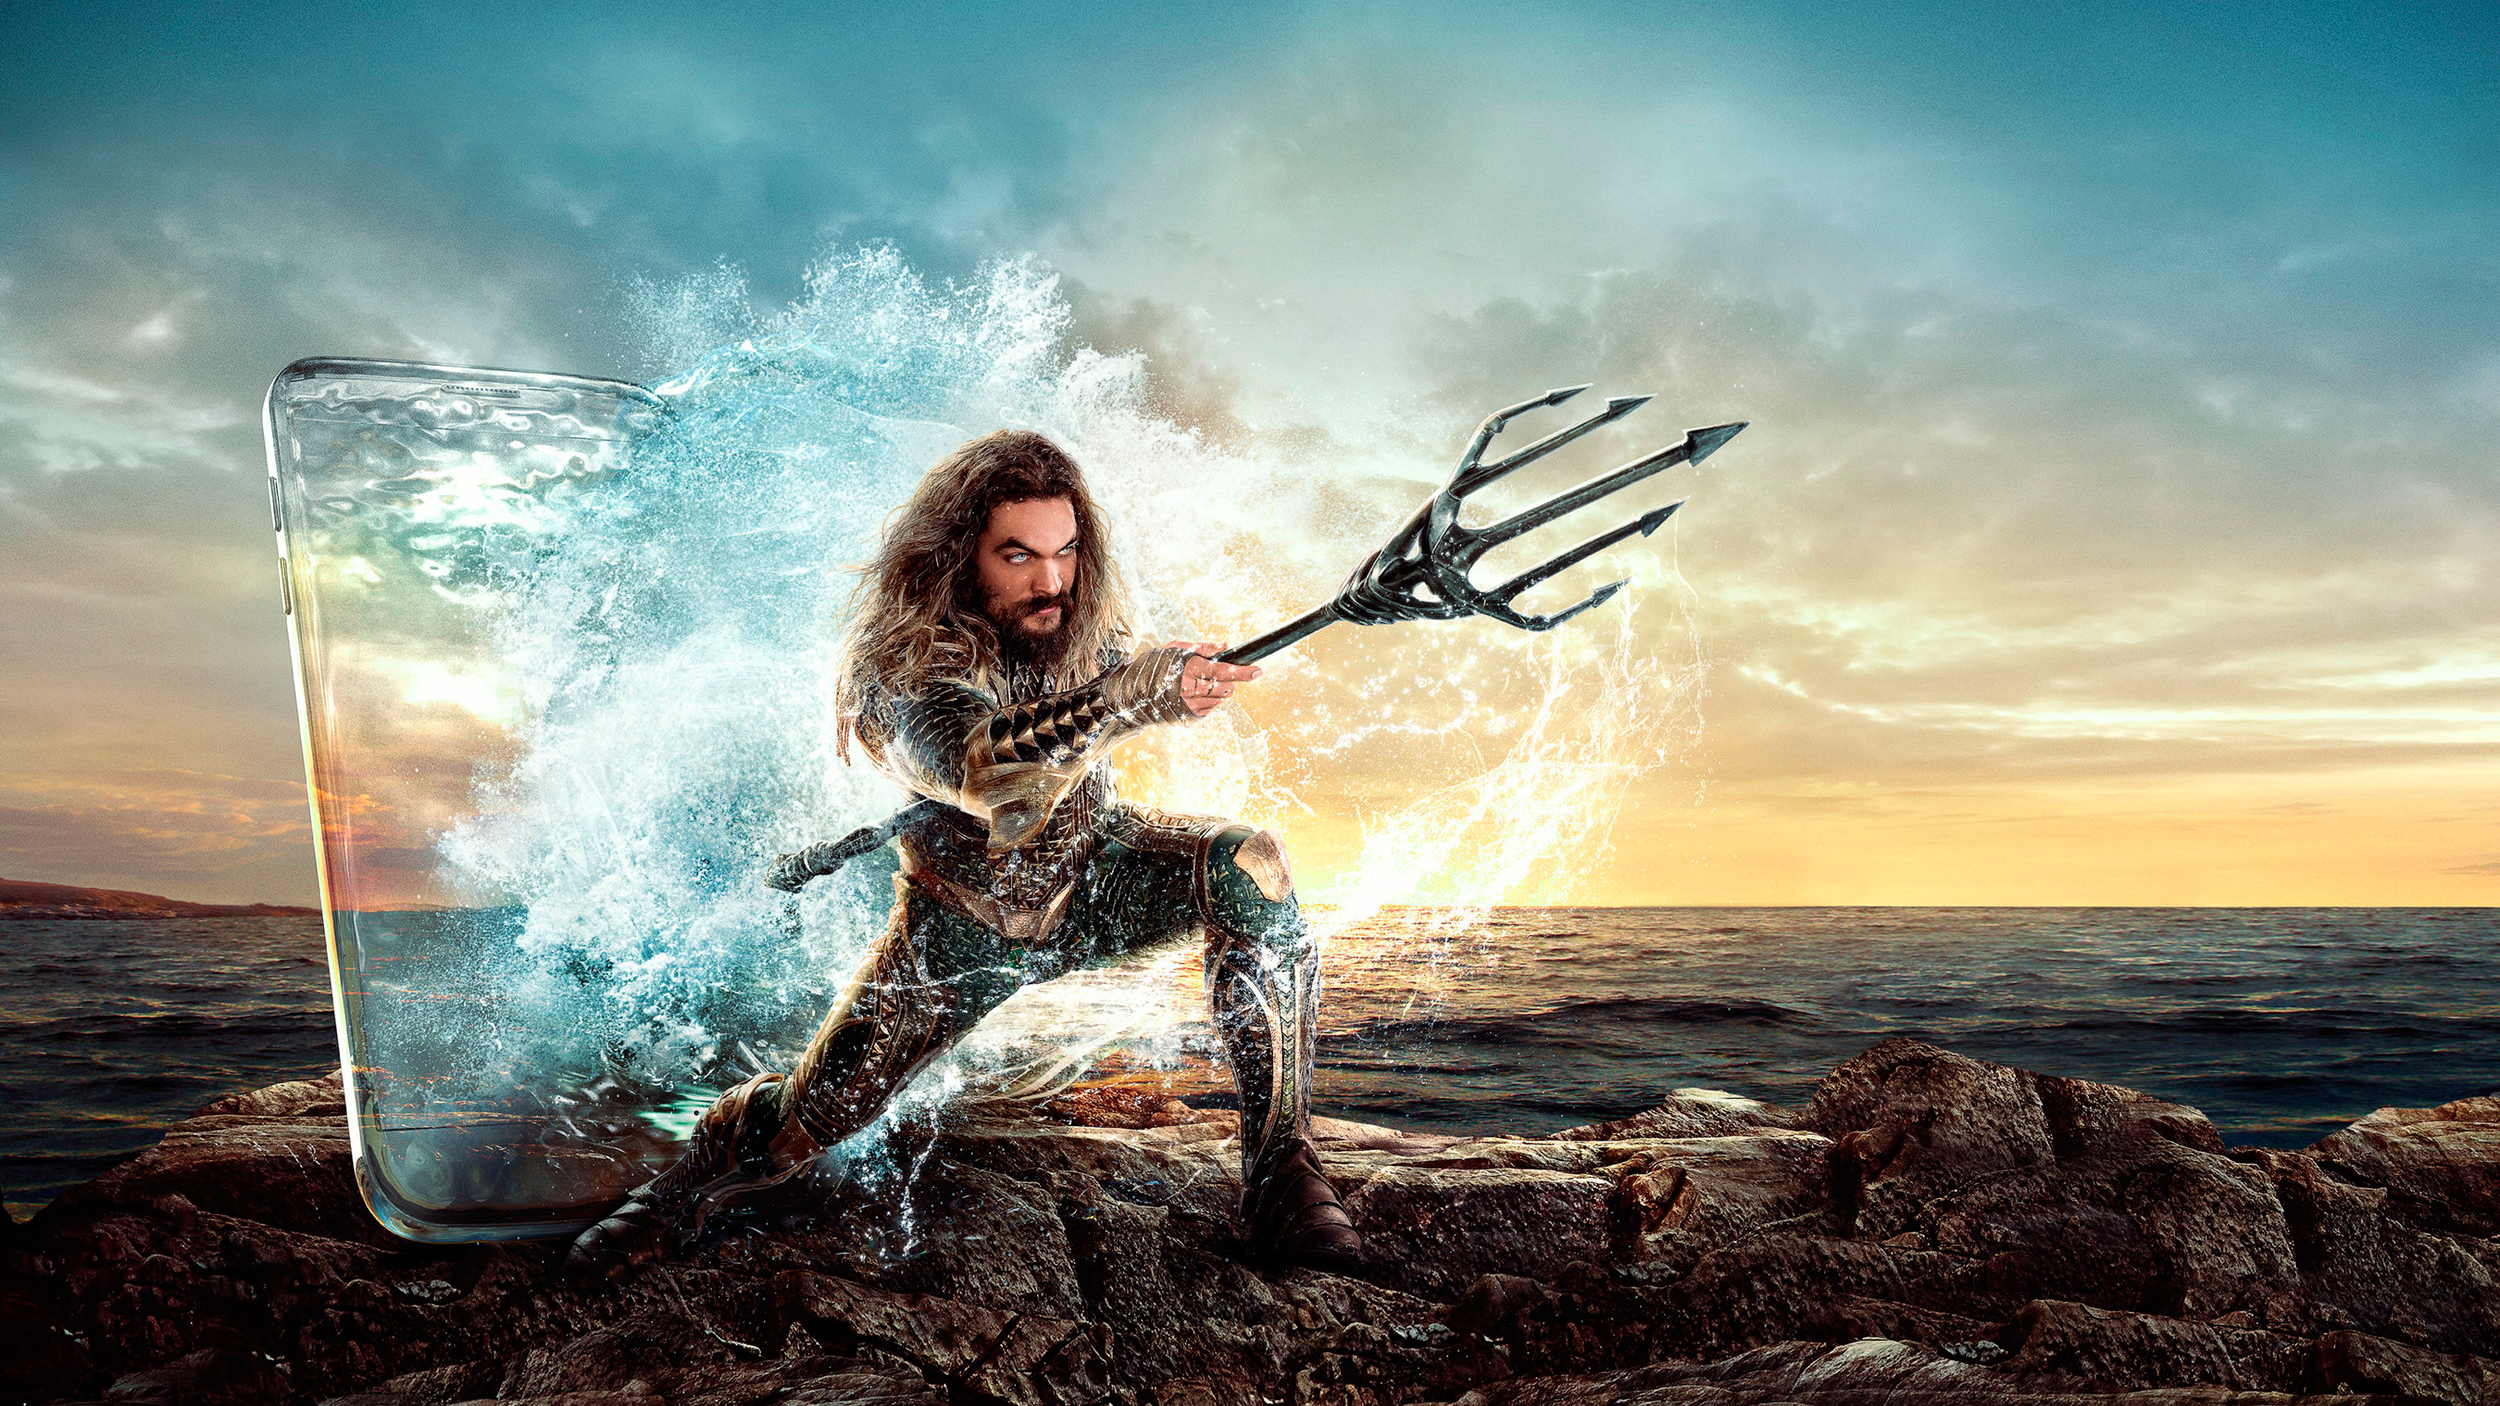 Wallpaper Of Aquaman Jason Momoa Movie Poster Background HD Image